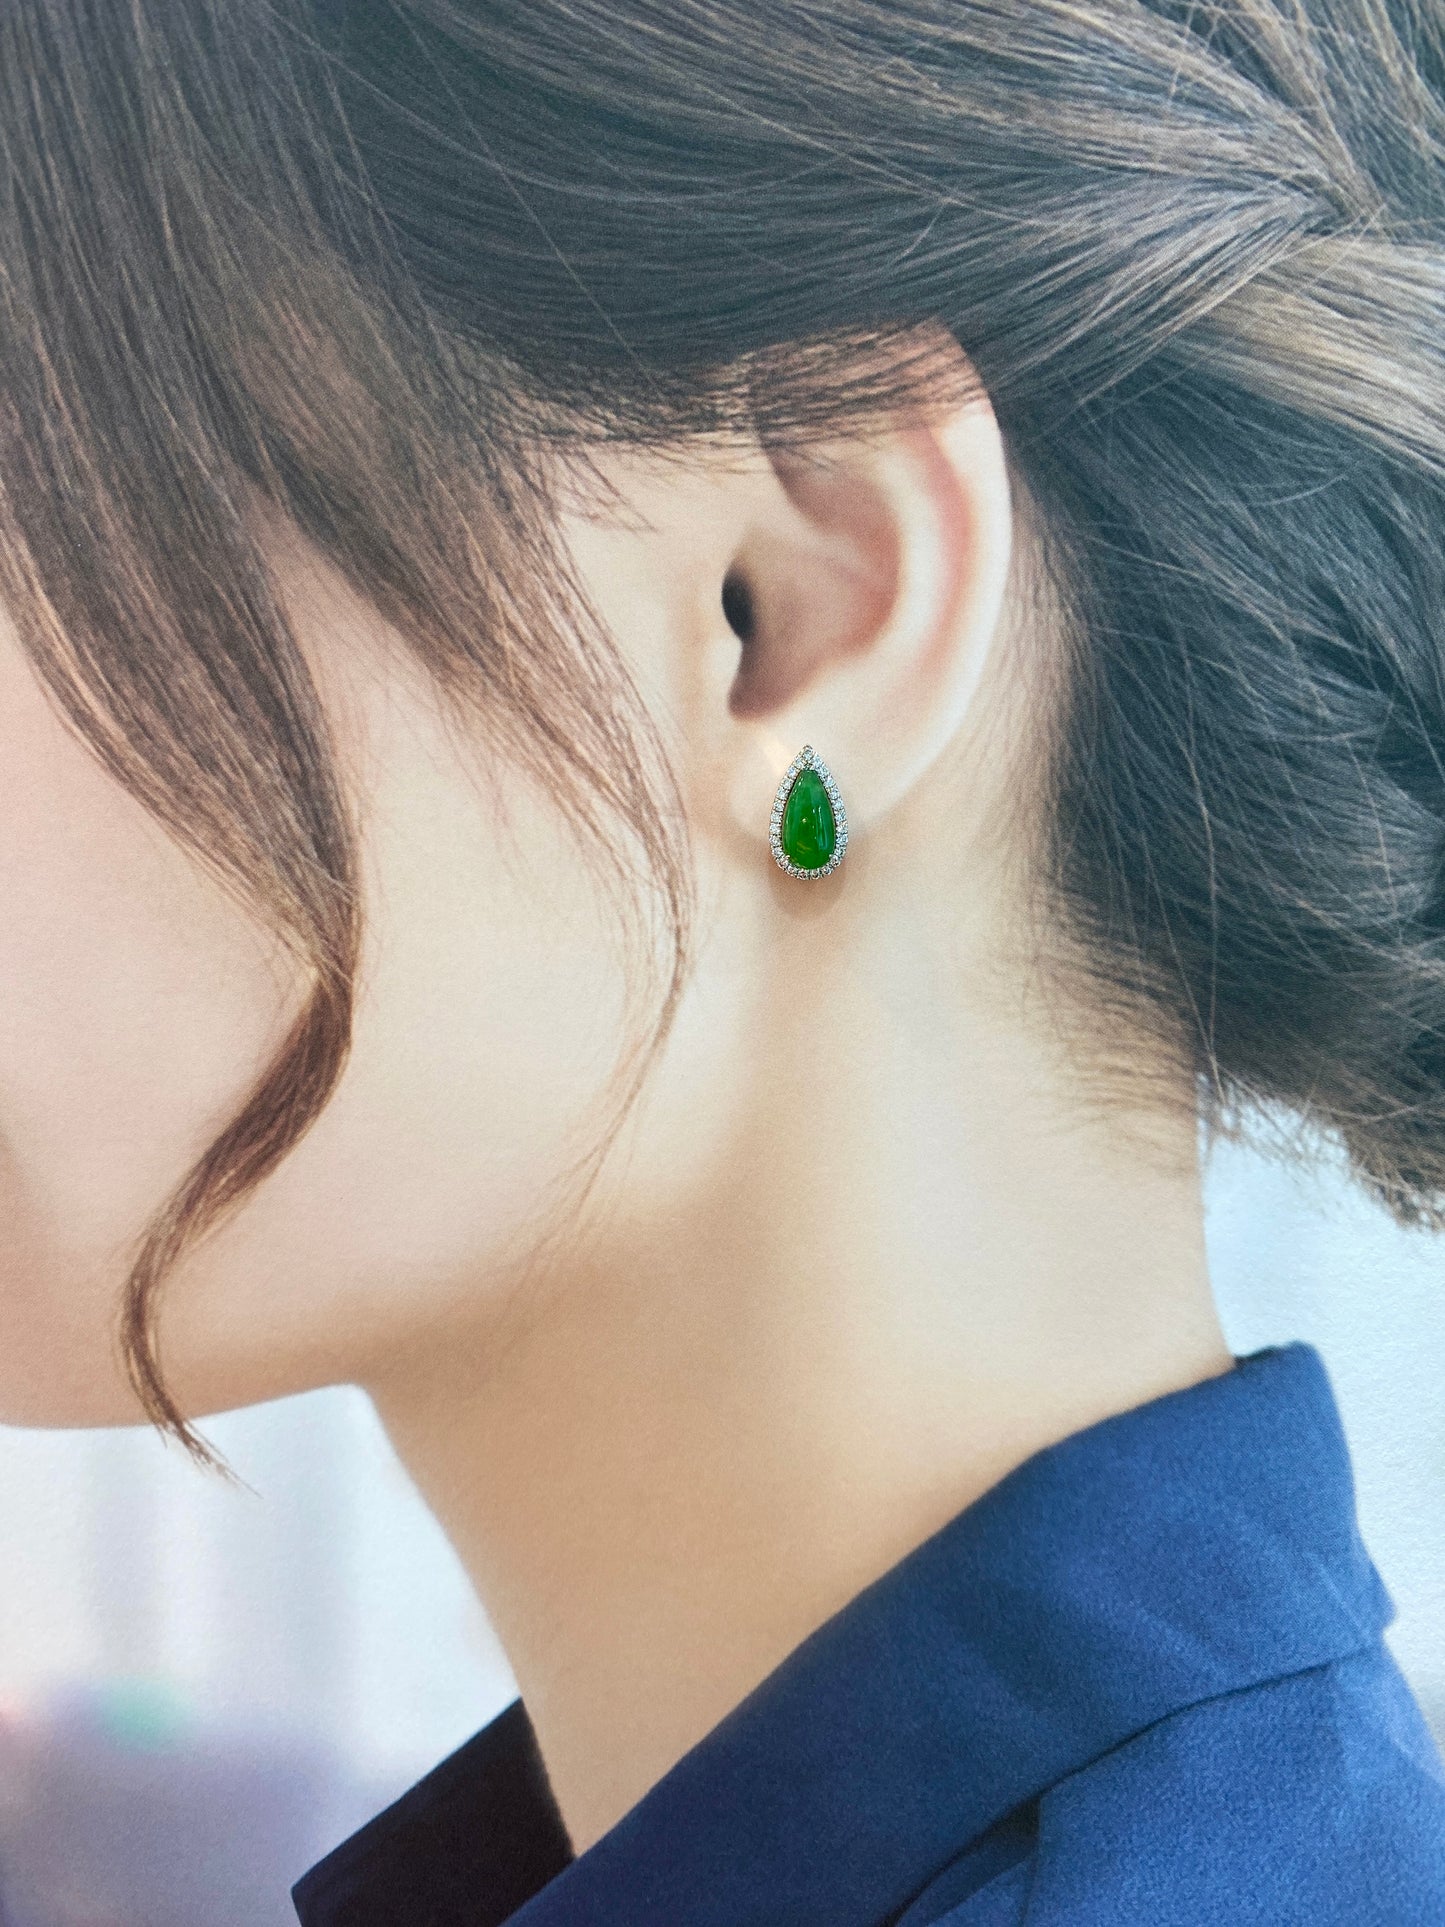 Natural Type A Jadeite Earrings